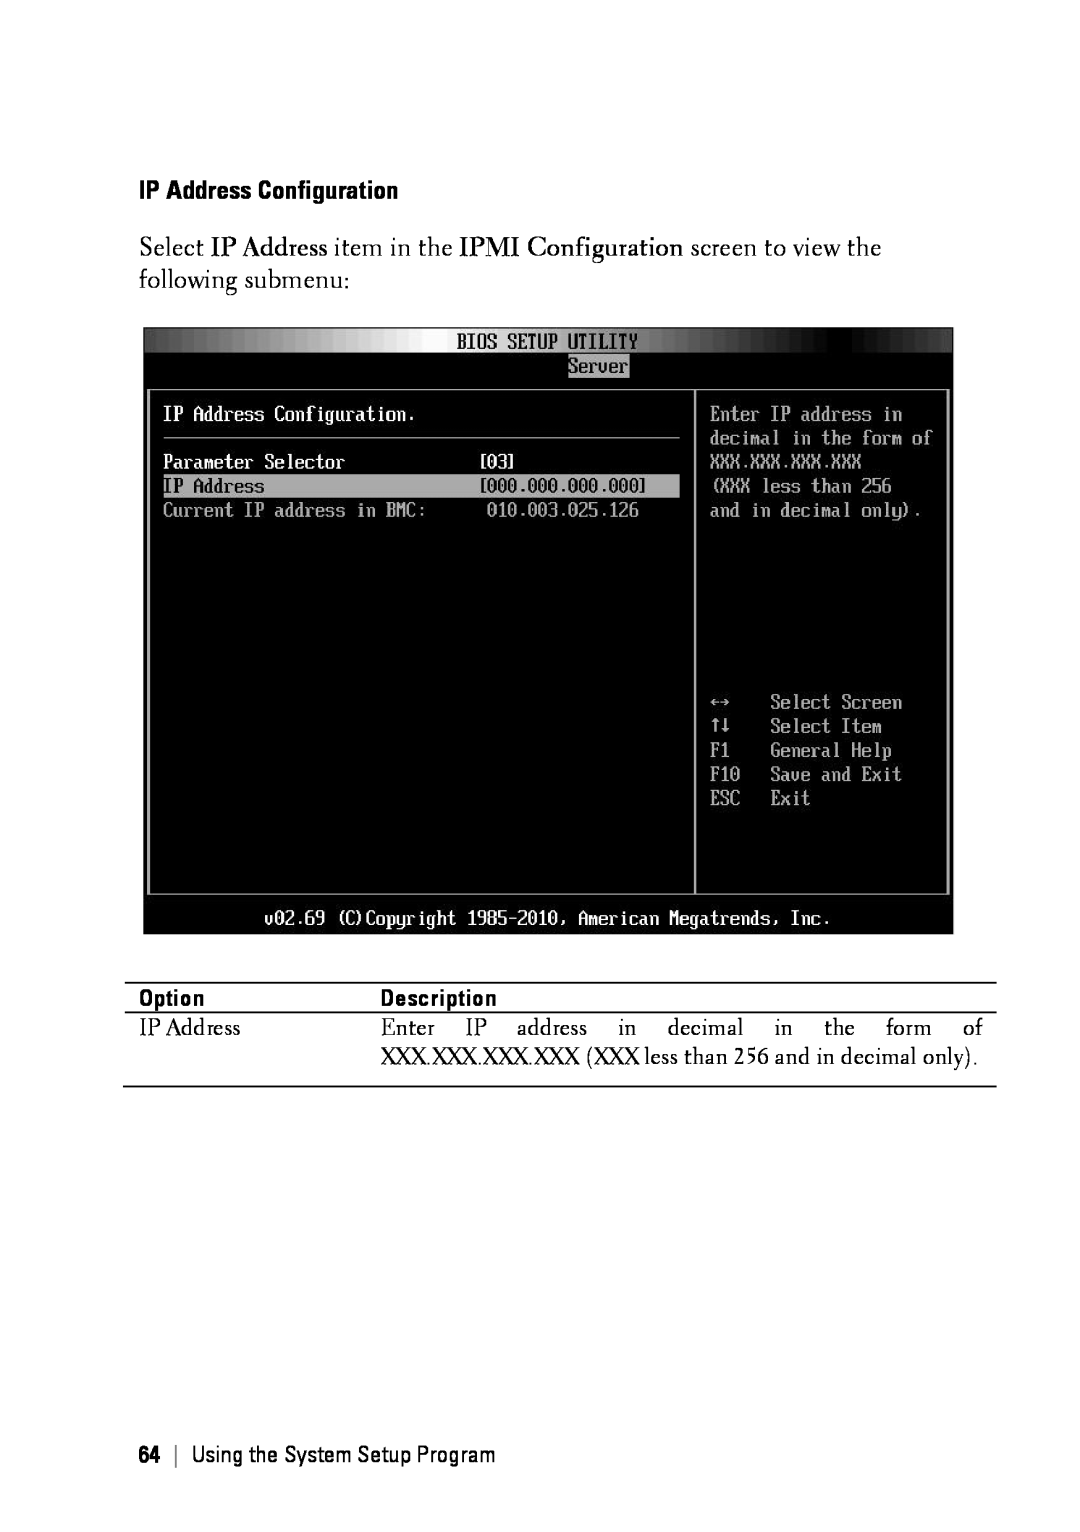 Dell C6145 manual IP Address Configuration, Option, Description, Enter IP address in decimal in the form of 